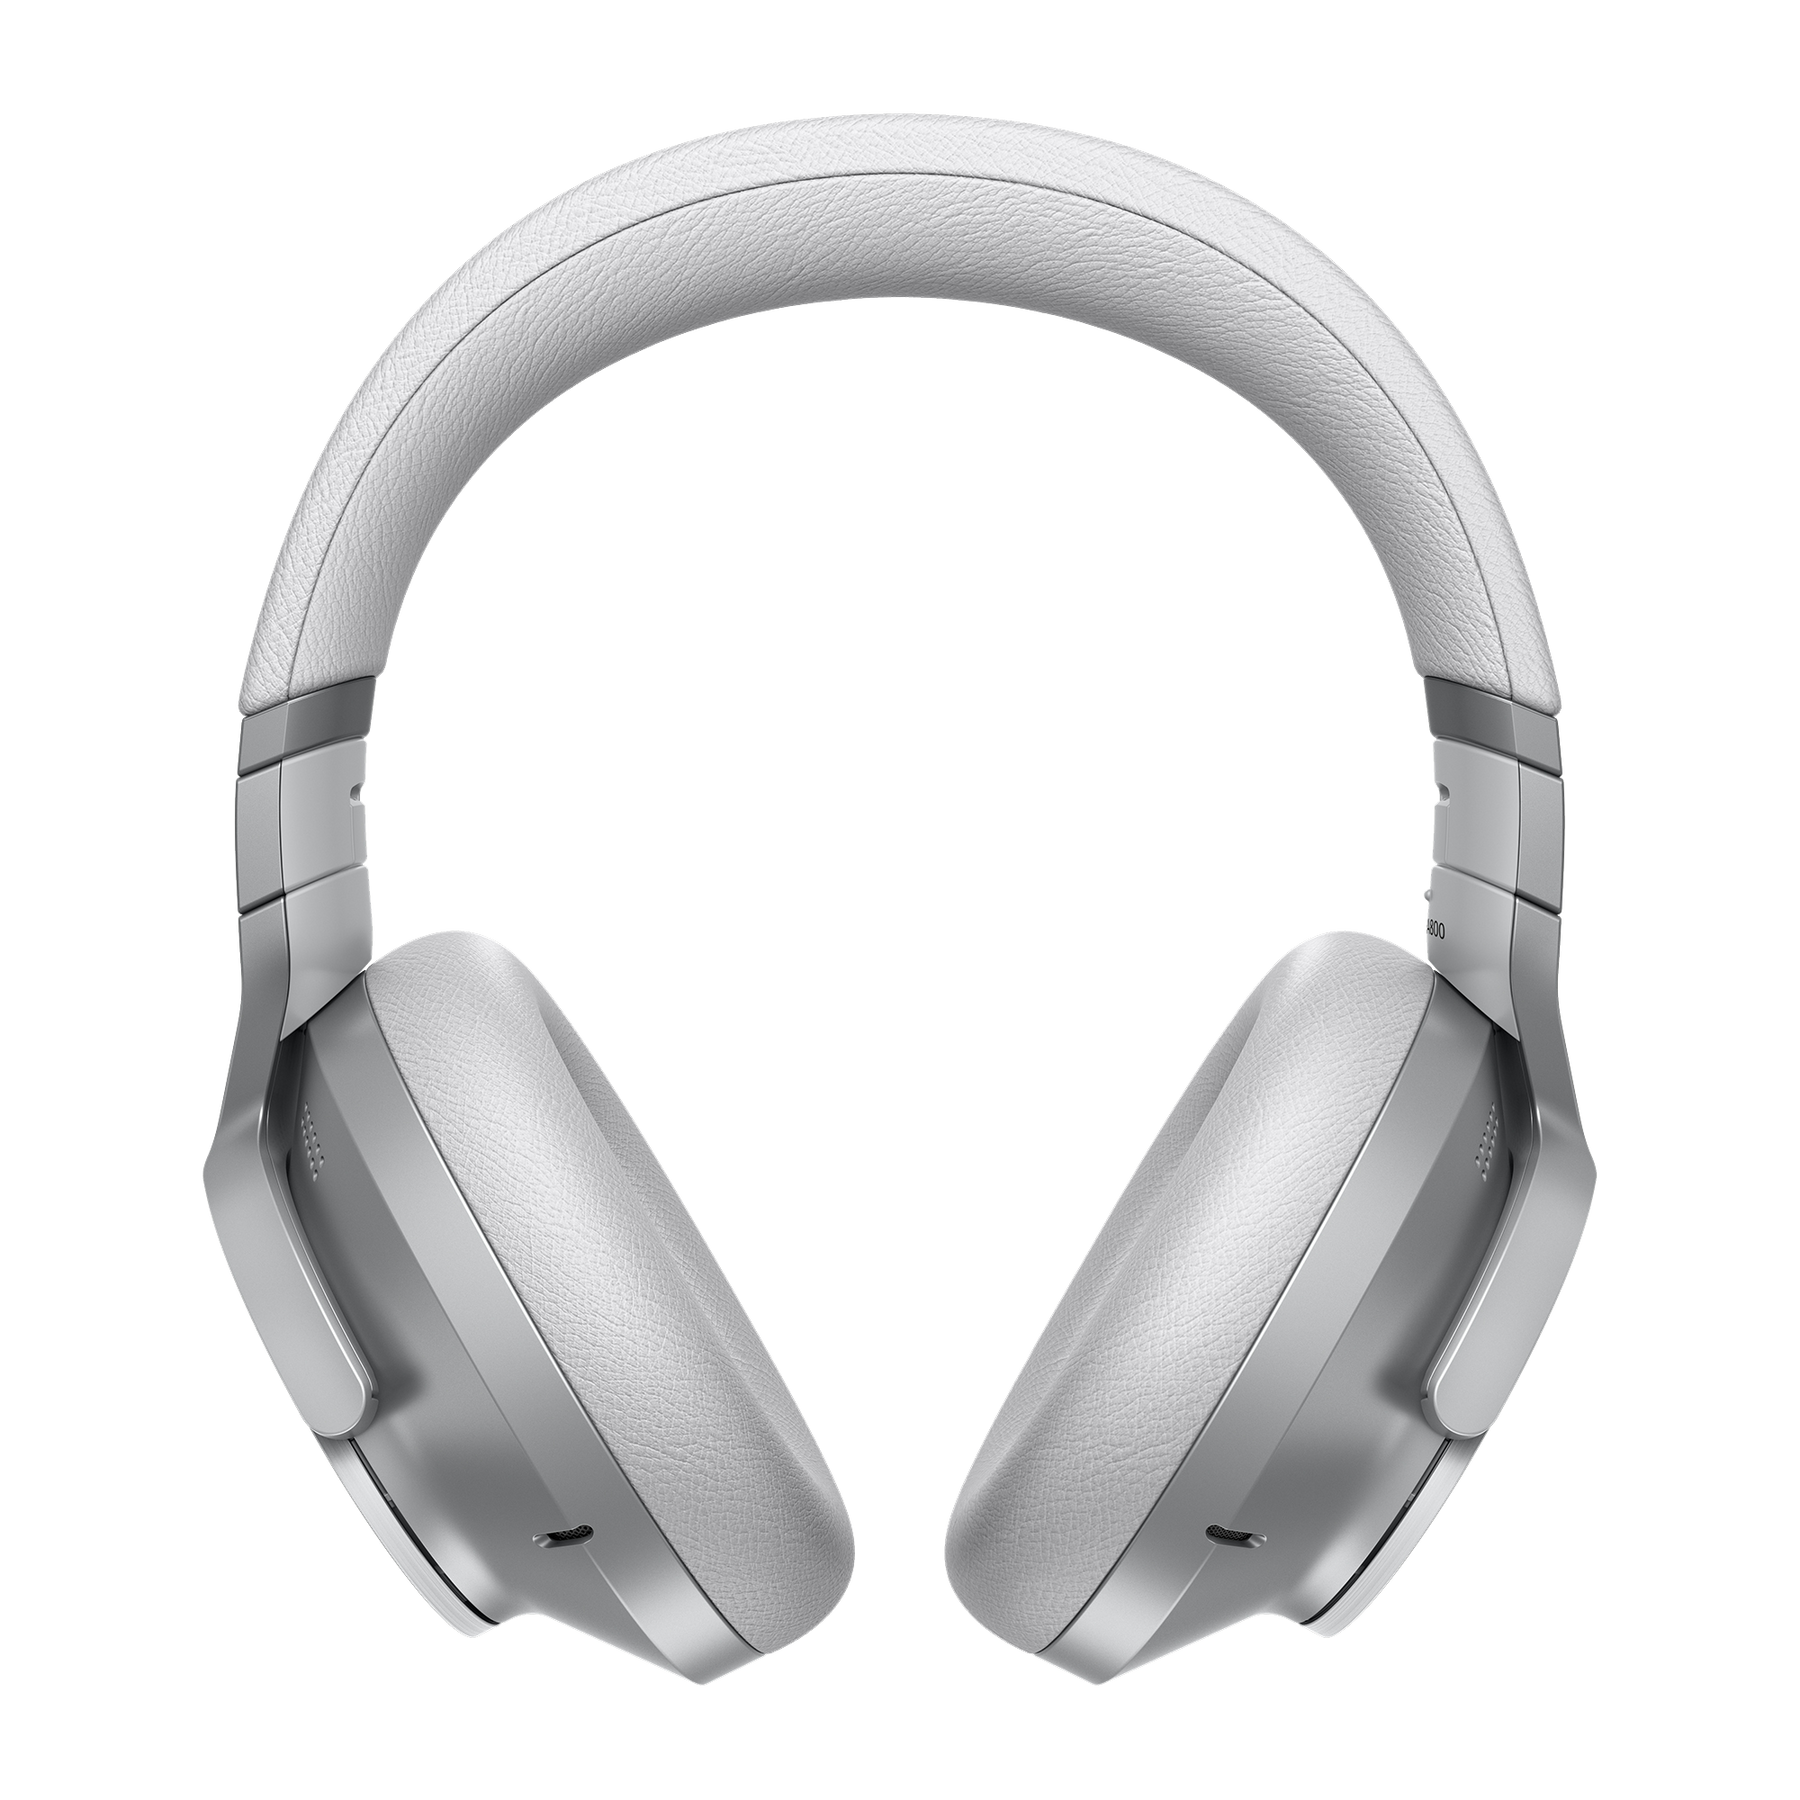 WH-1000XM3 Wireless Noise Cancelling Headphones (Black)